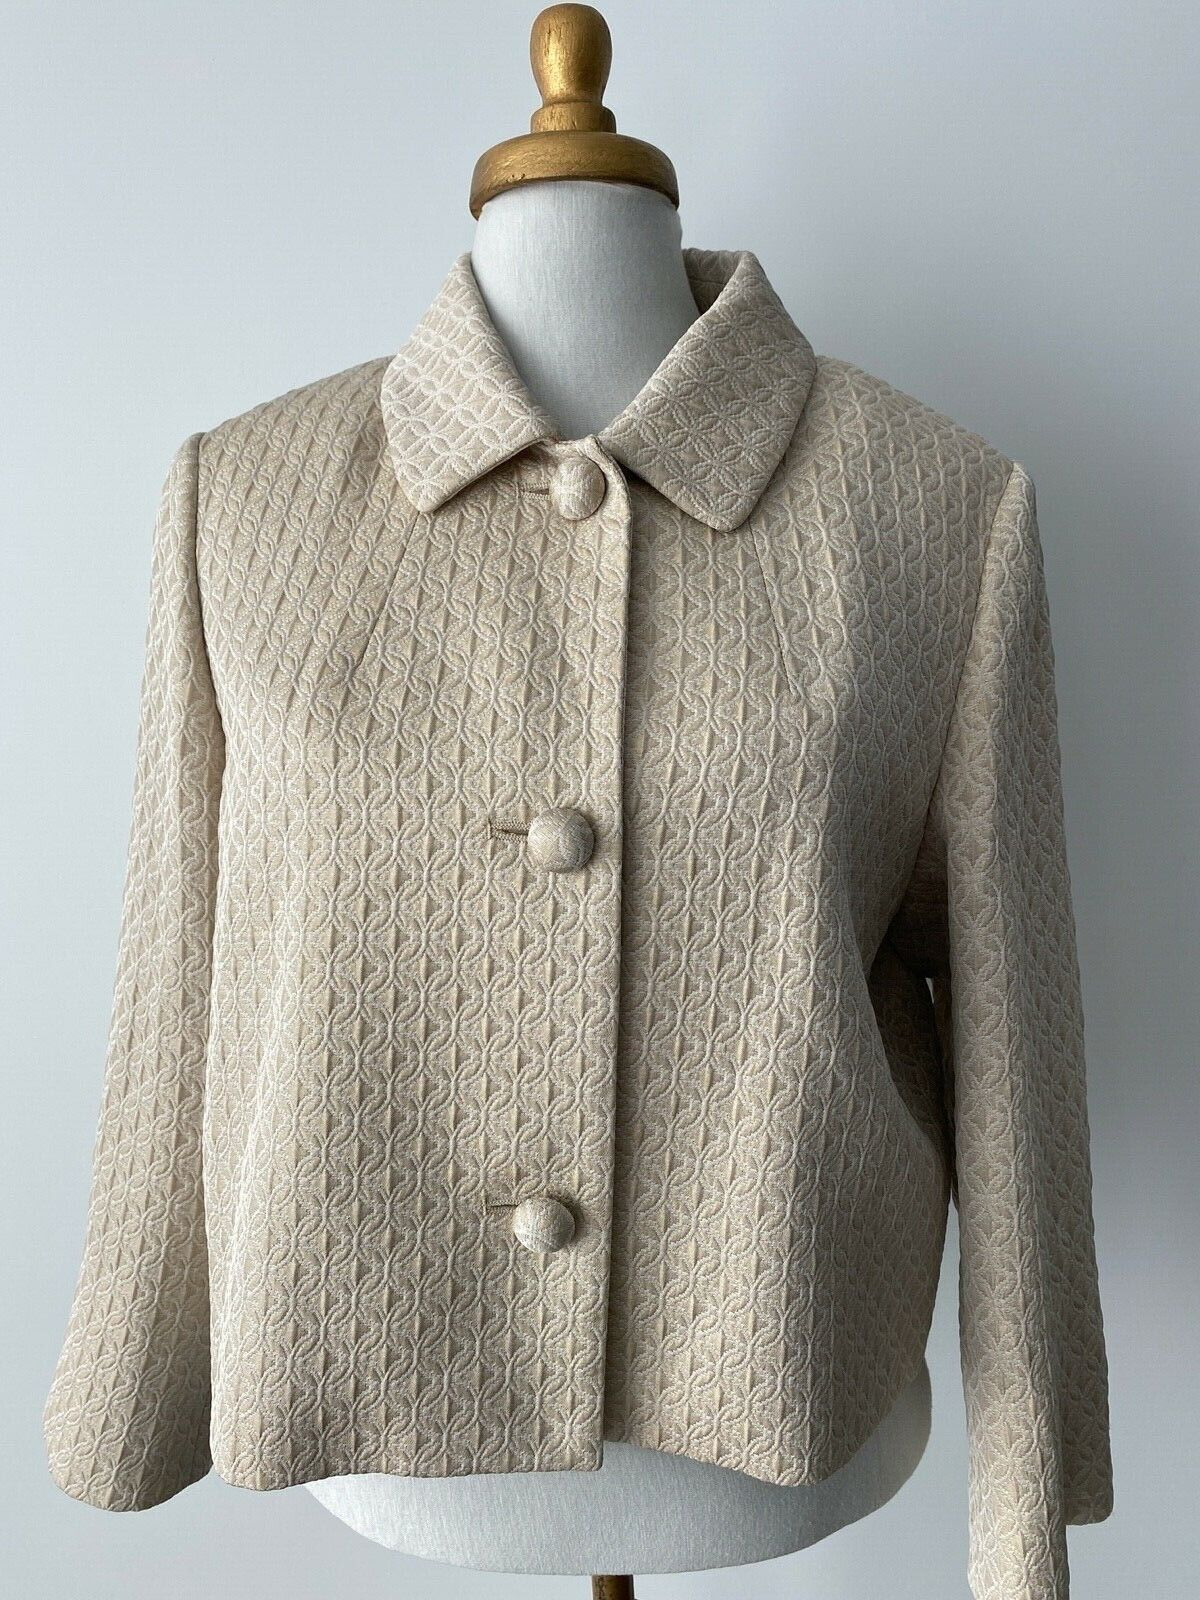 Neerwaarts Vooravond Blij Max Mara Studio Cream Short Jacket Floral Jacquard Print Size UK 12 IT 44 M  | eBay